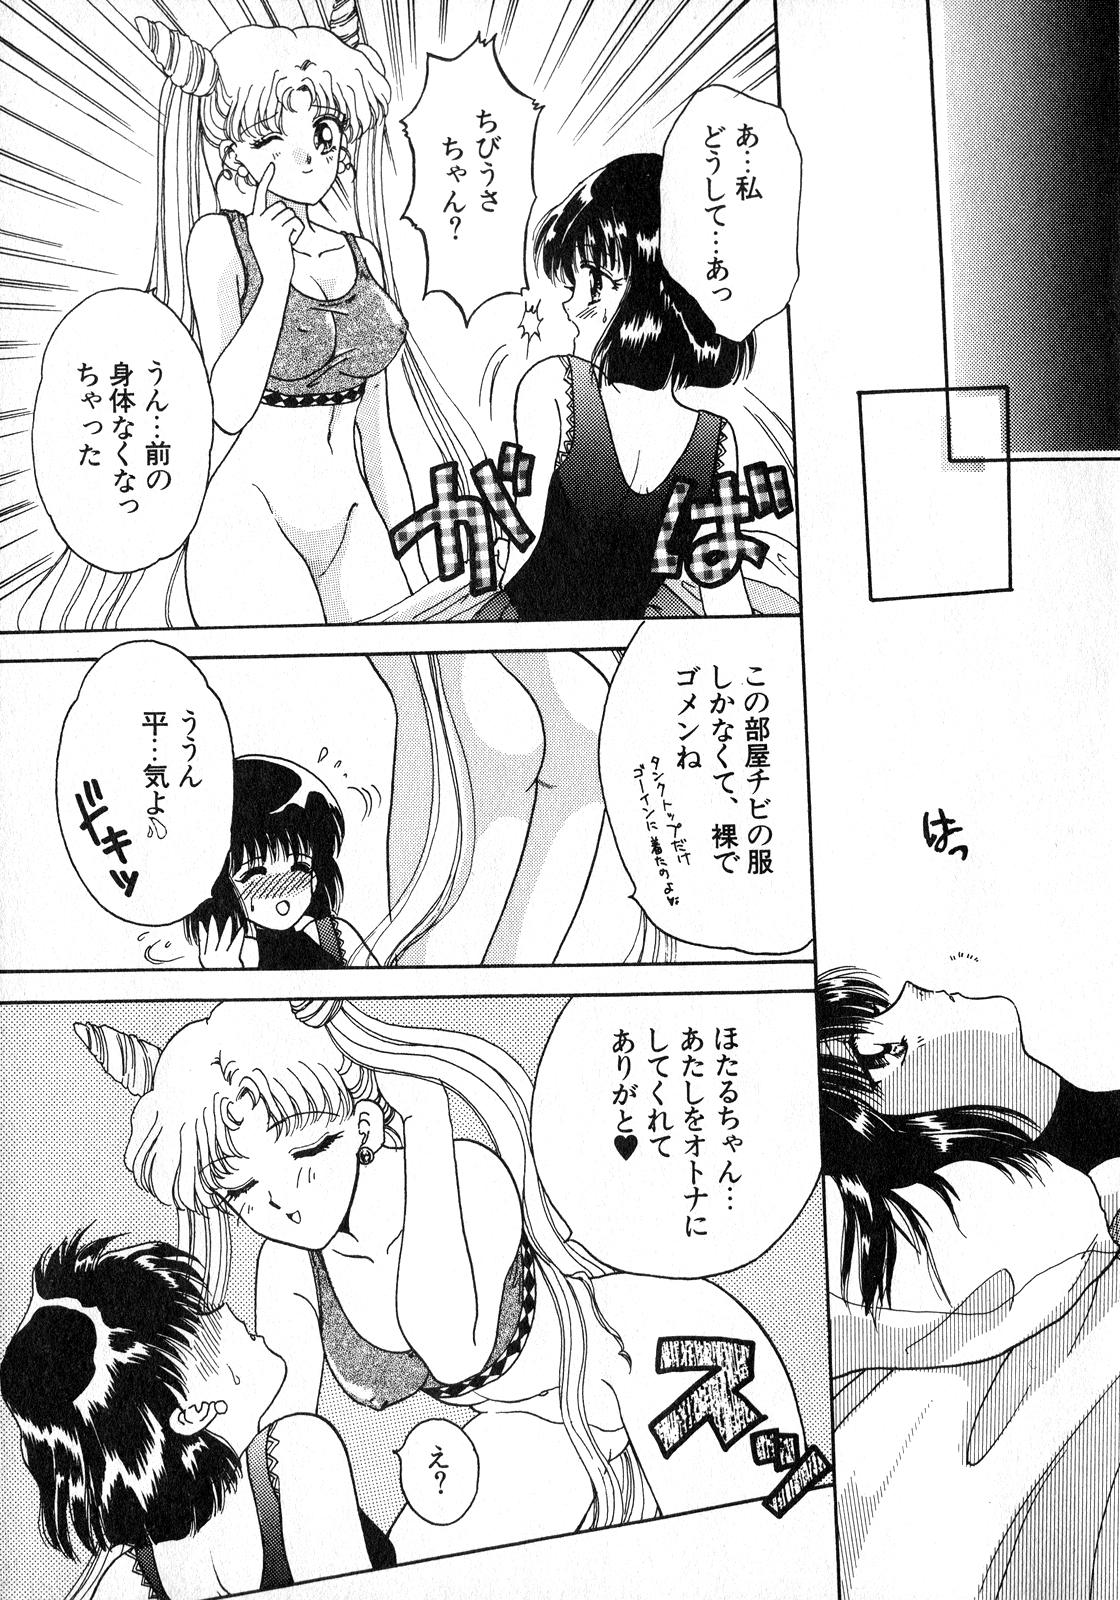 Bisexual Lunatic Party 8 - Sailor moon Coroa - Page 12